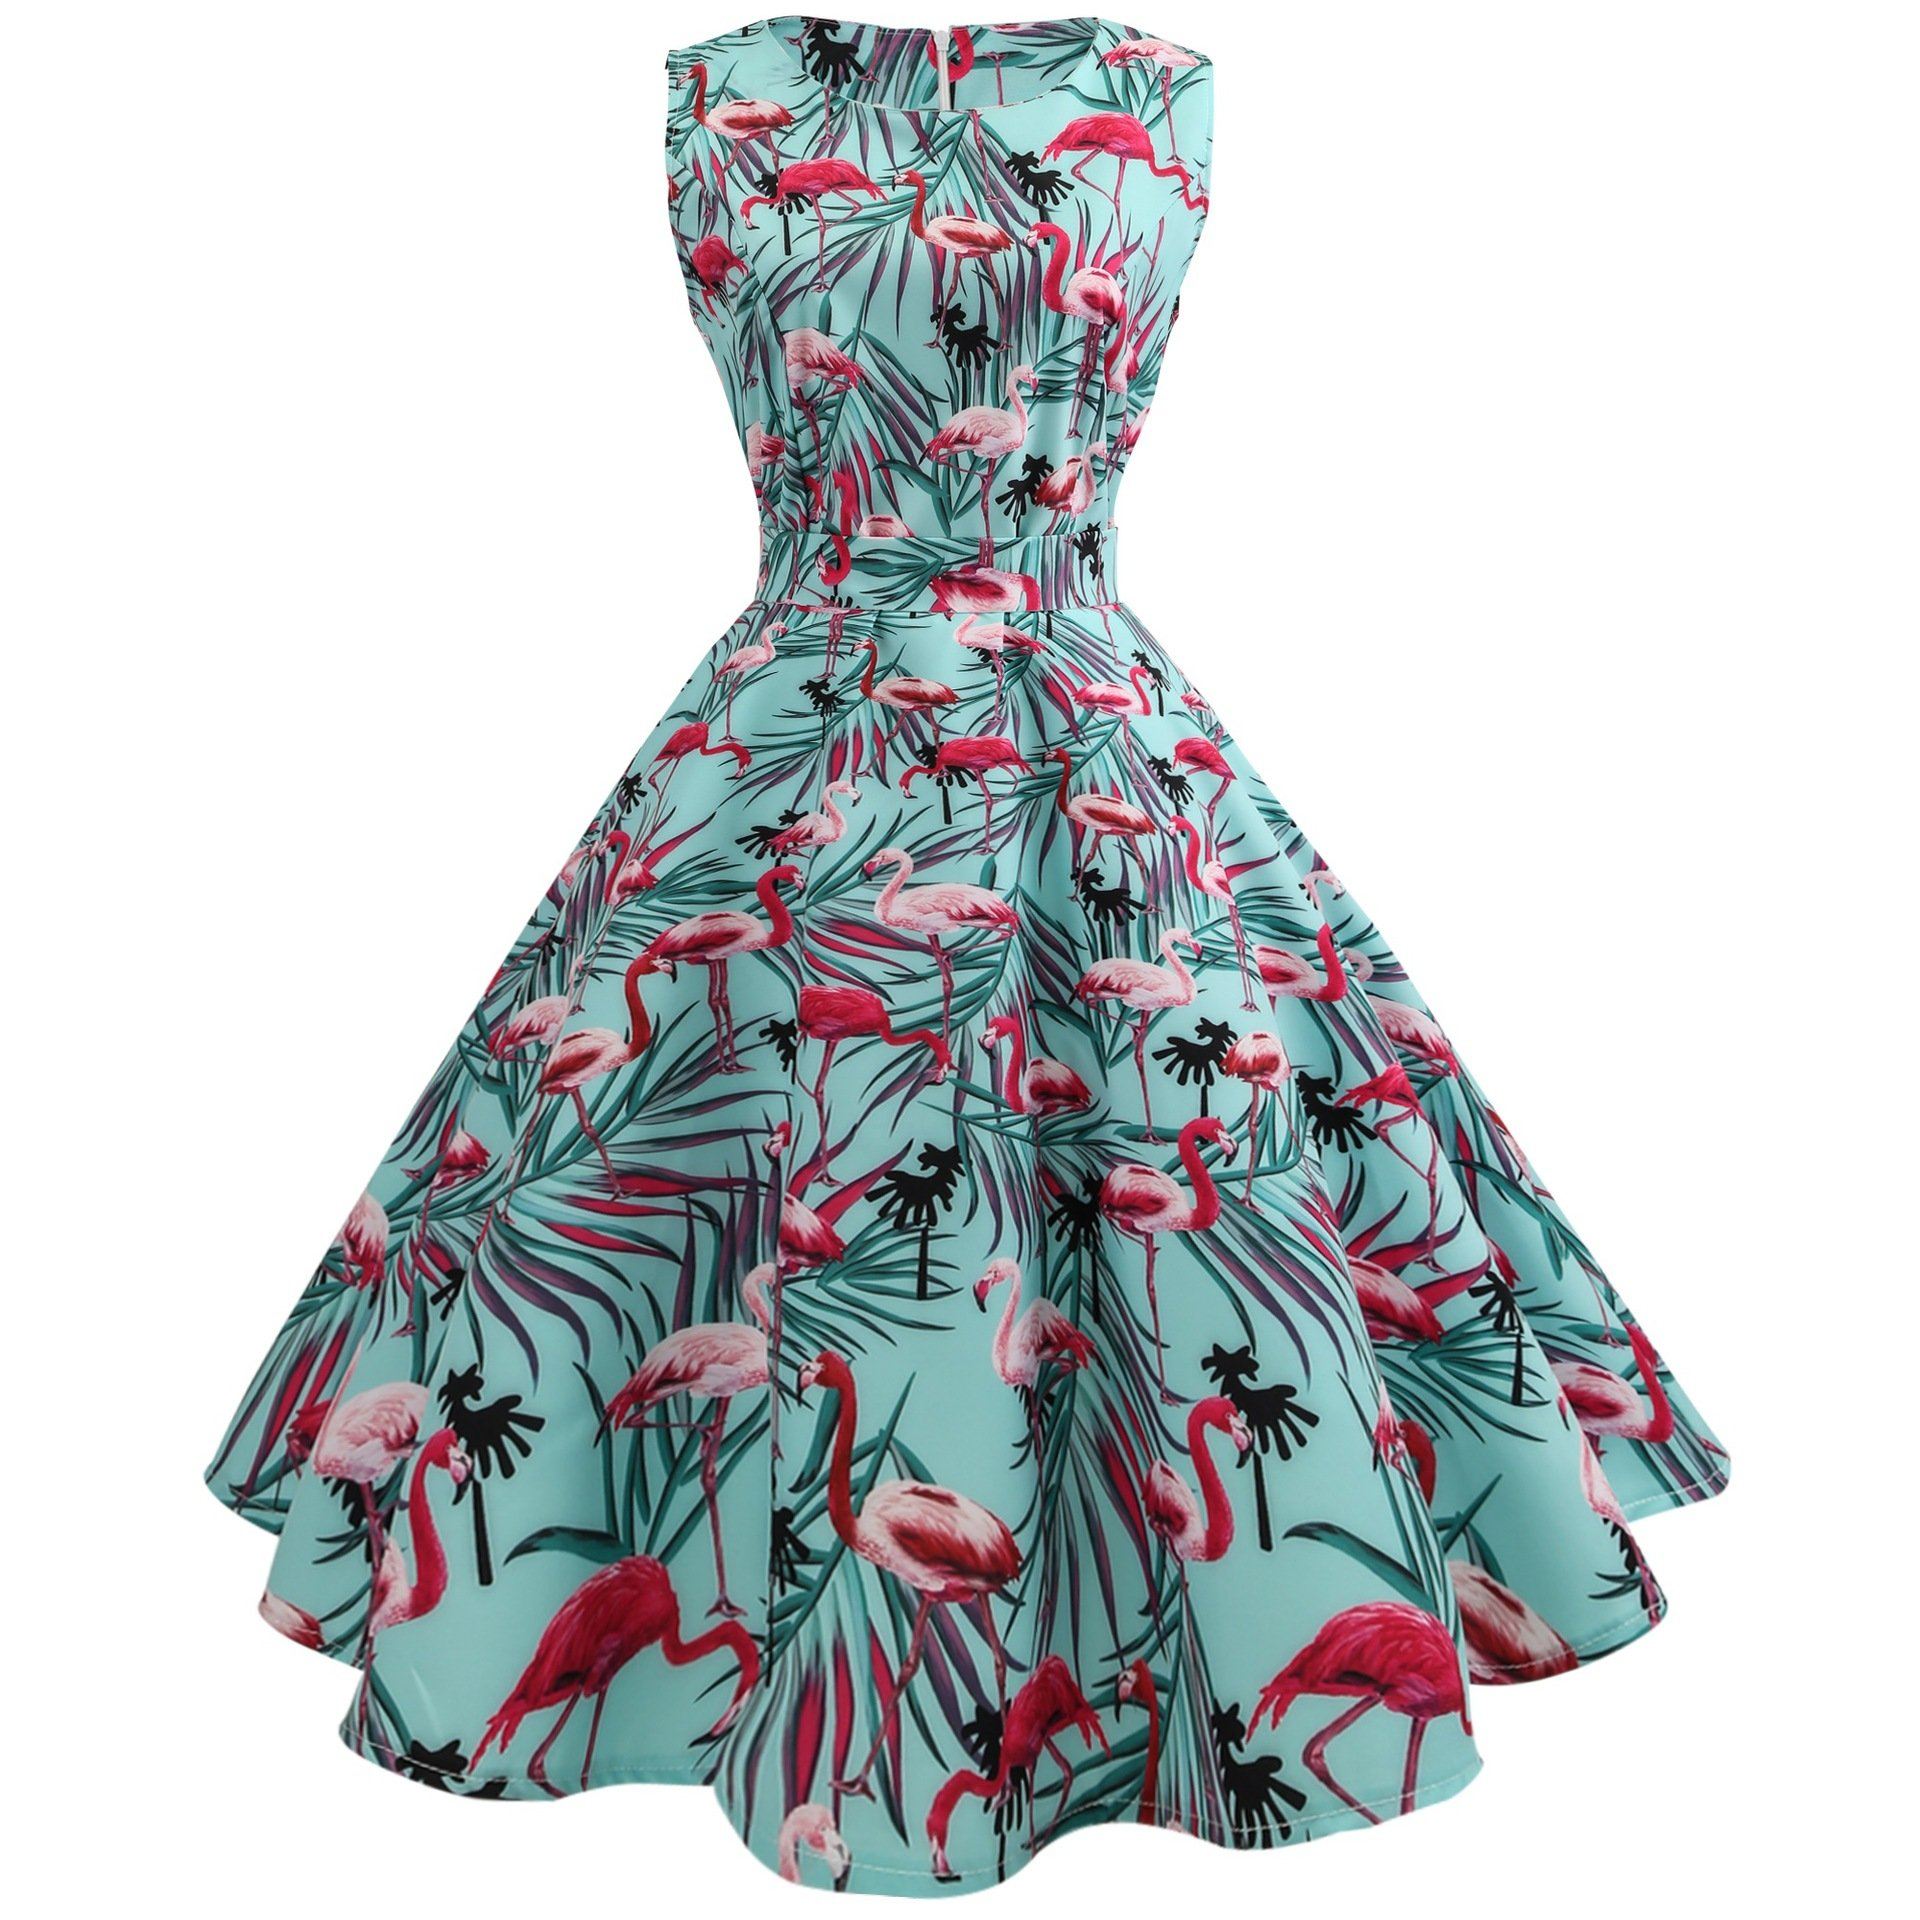 Flamingo Print Vintage Dresses for Women 1950s